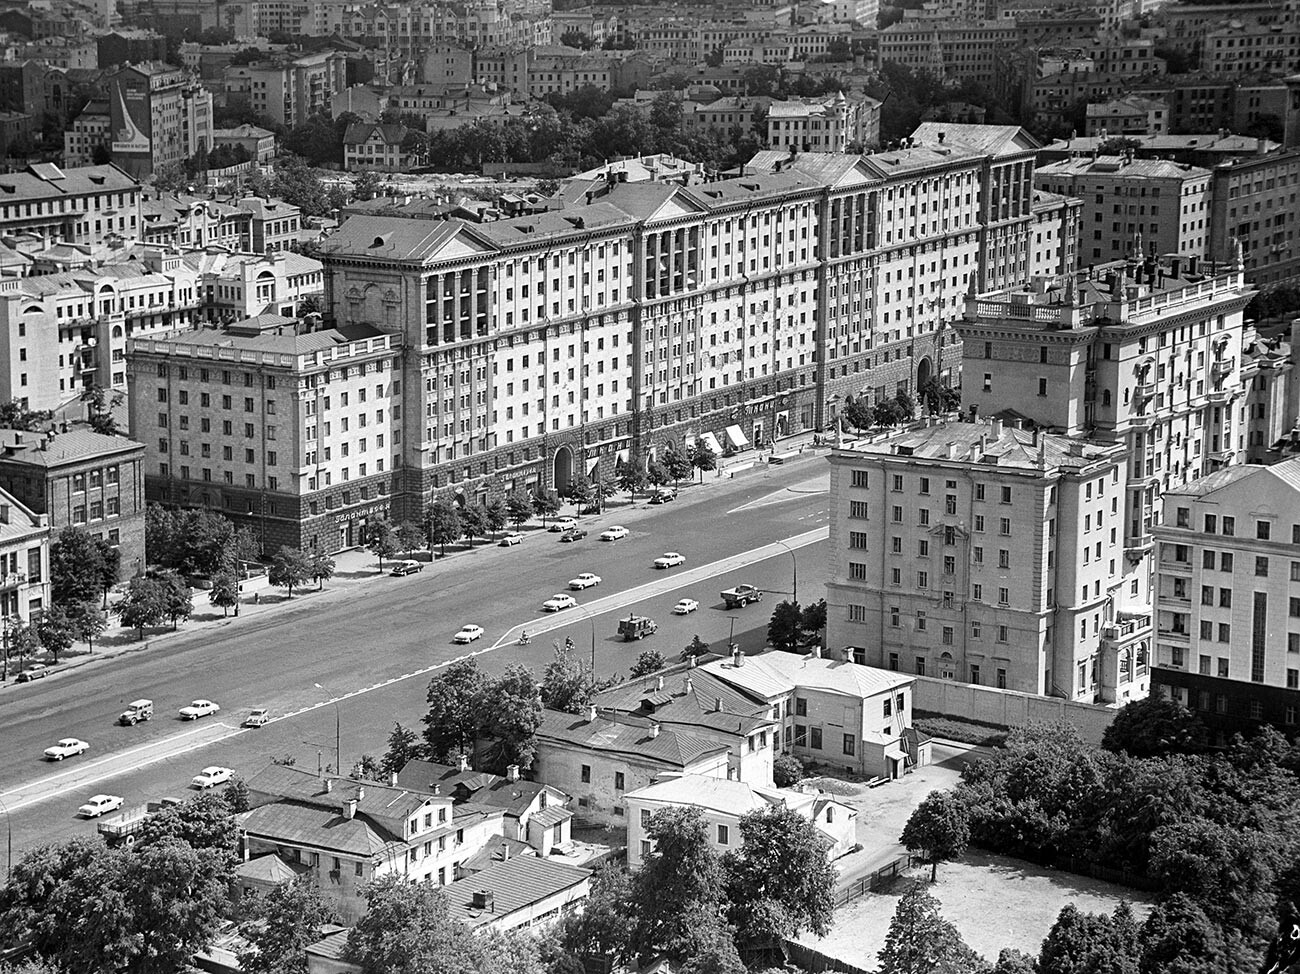 Vista di via Pjotr Chajkovskij (nome dal 1940 al 1994 dell’attuale Novinskij boulevard), da dove veniva irradiata l’ambasciata americana